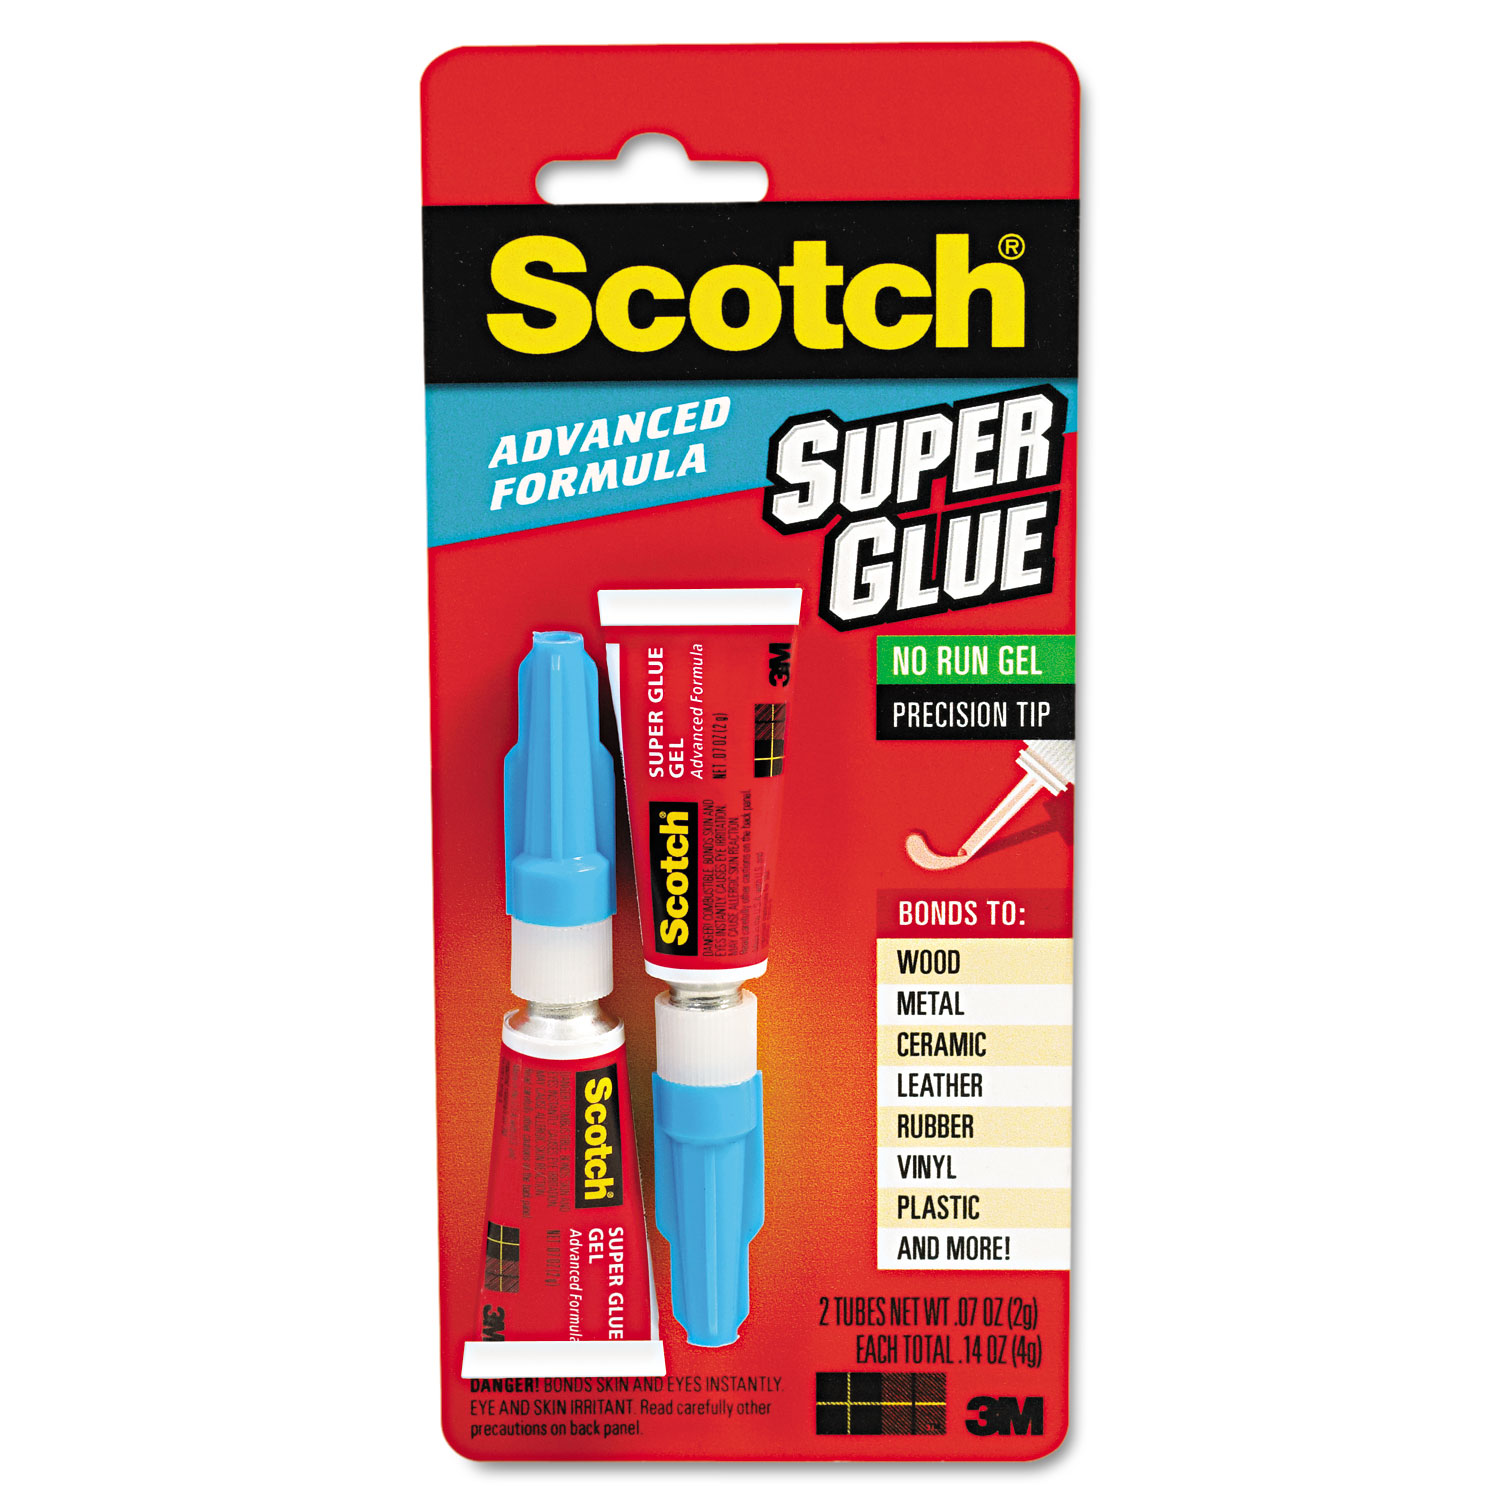  Scotch AD122 Single Use Super Glue Advanced Formula Gel, 0.07 oz, Dries Clear, 2/Pack (MMMAD122) 